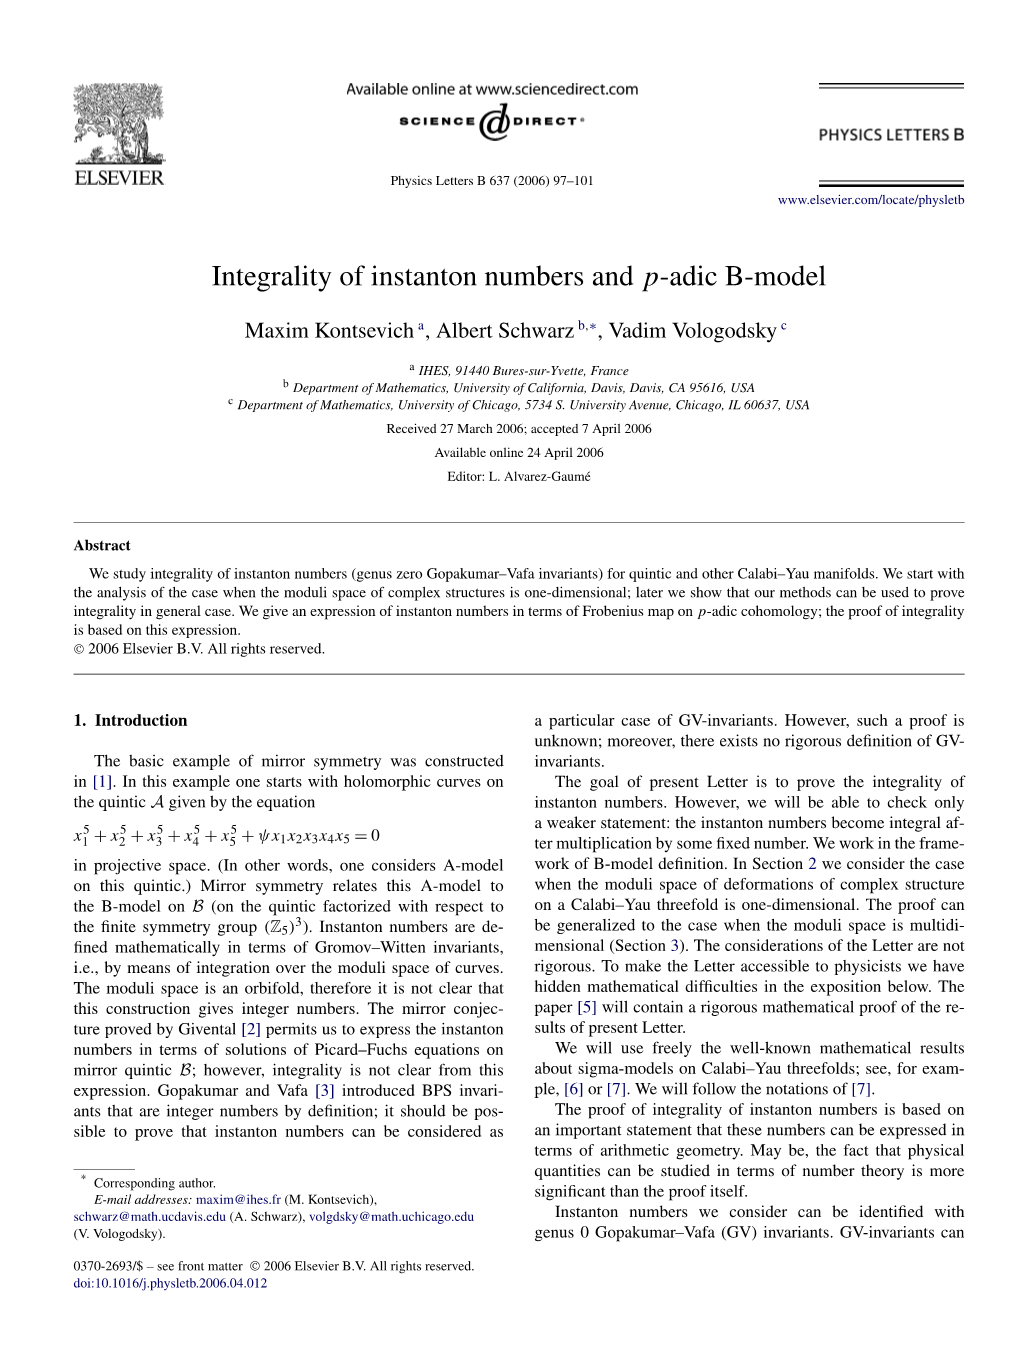 Integrality of Instanton Numbers and P-Adic B-Model